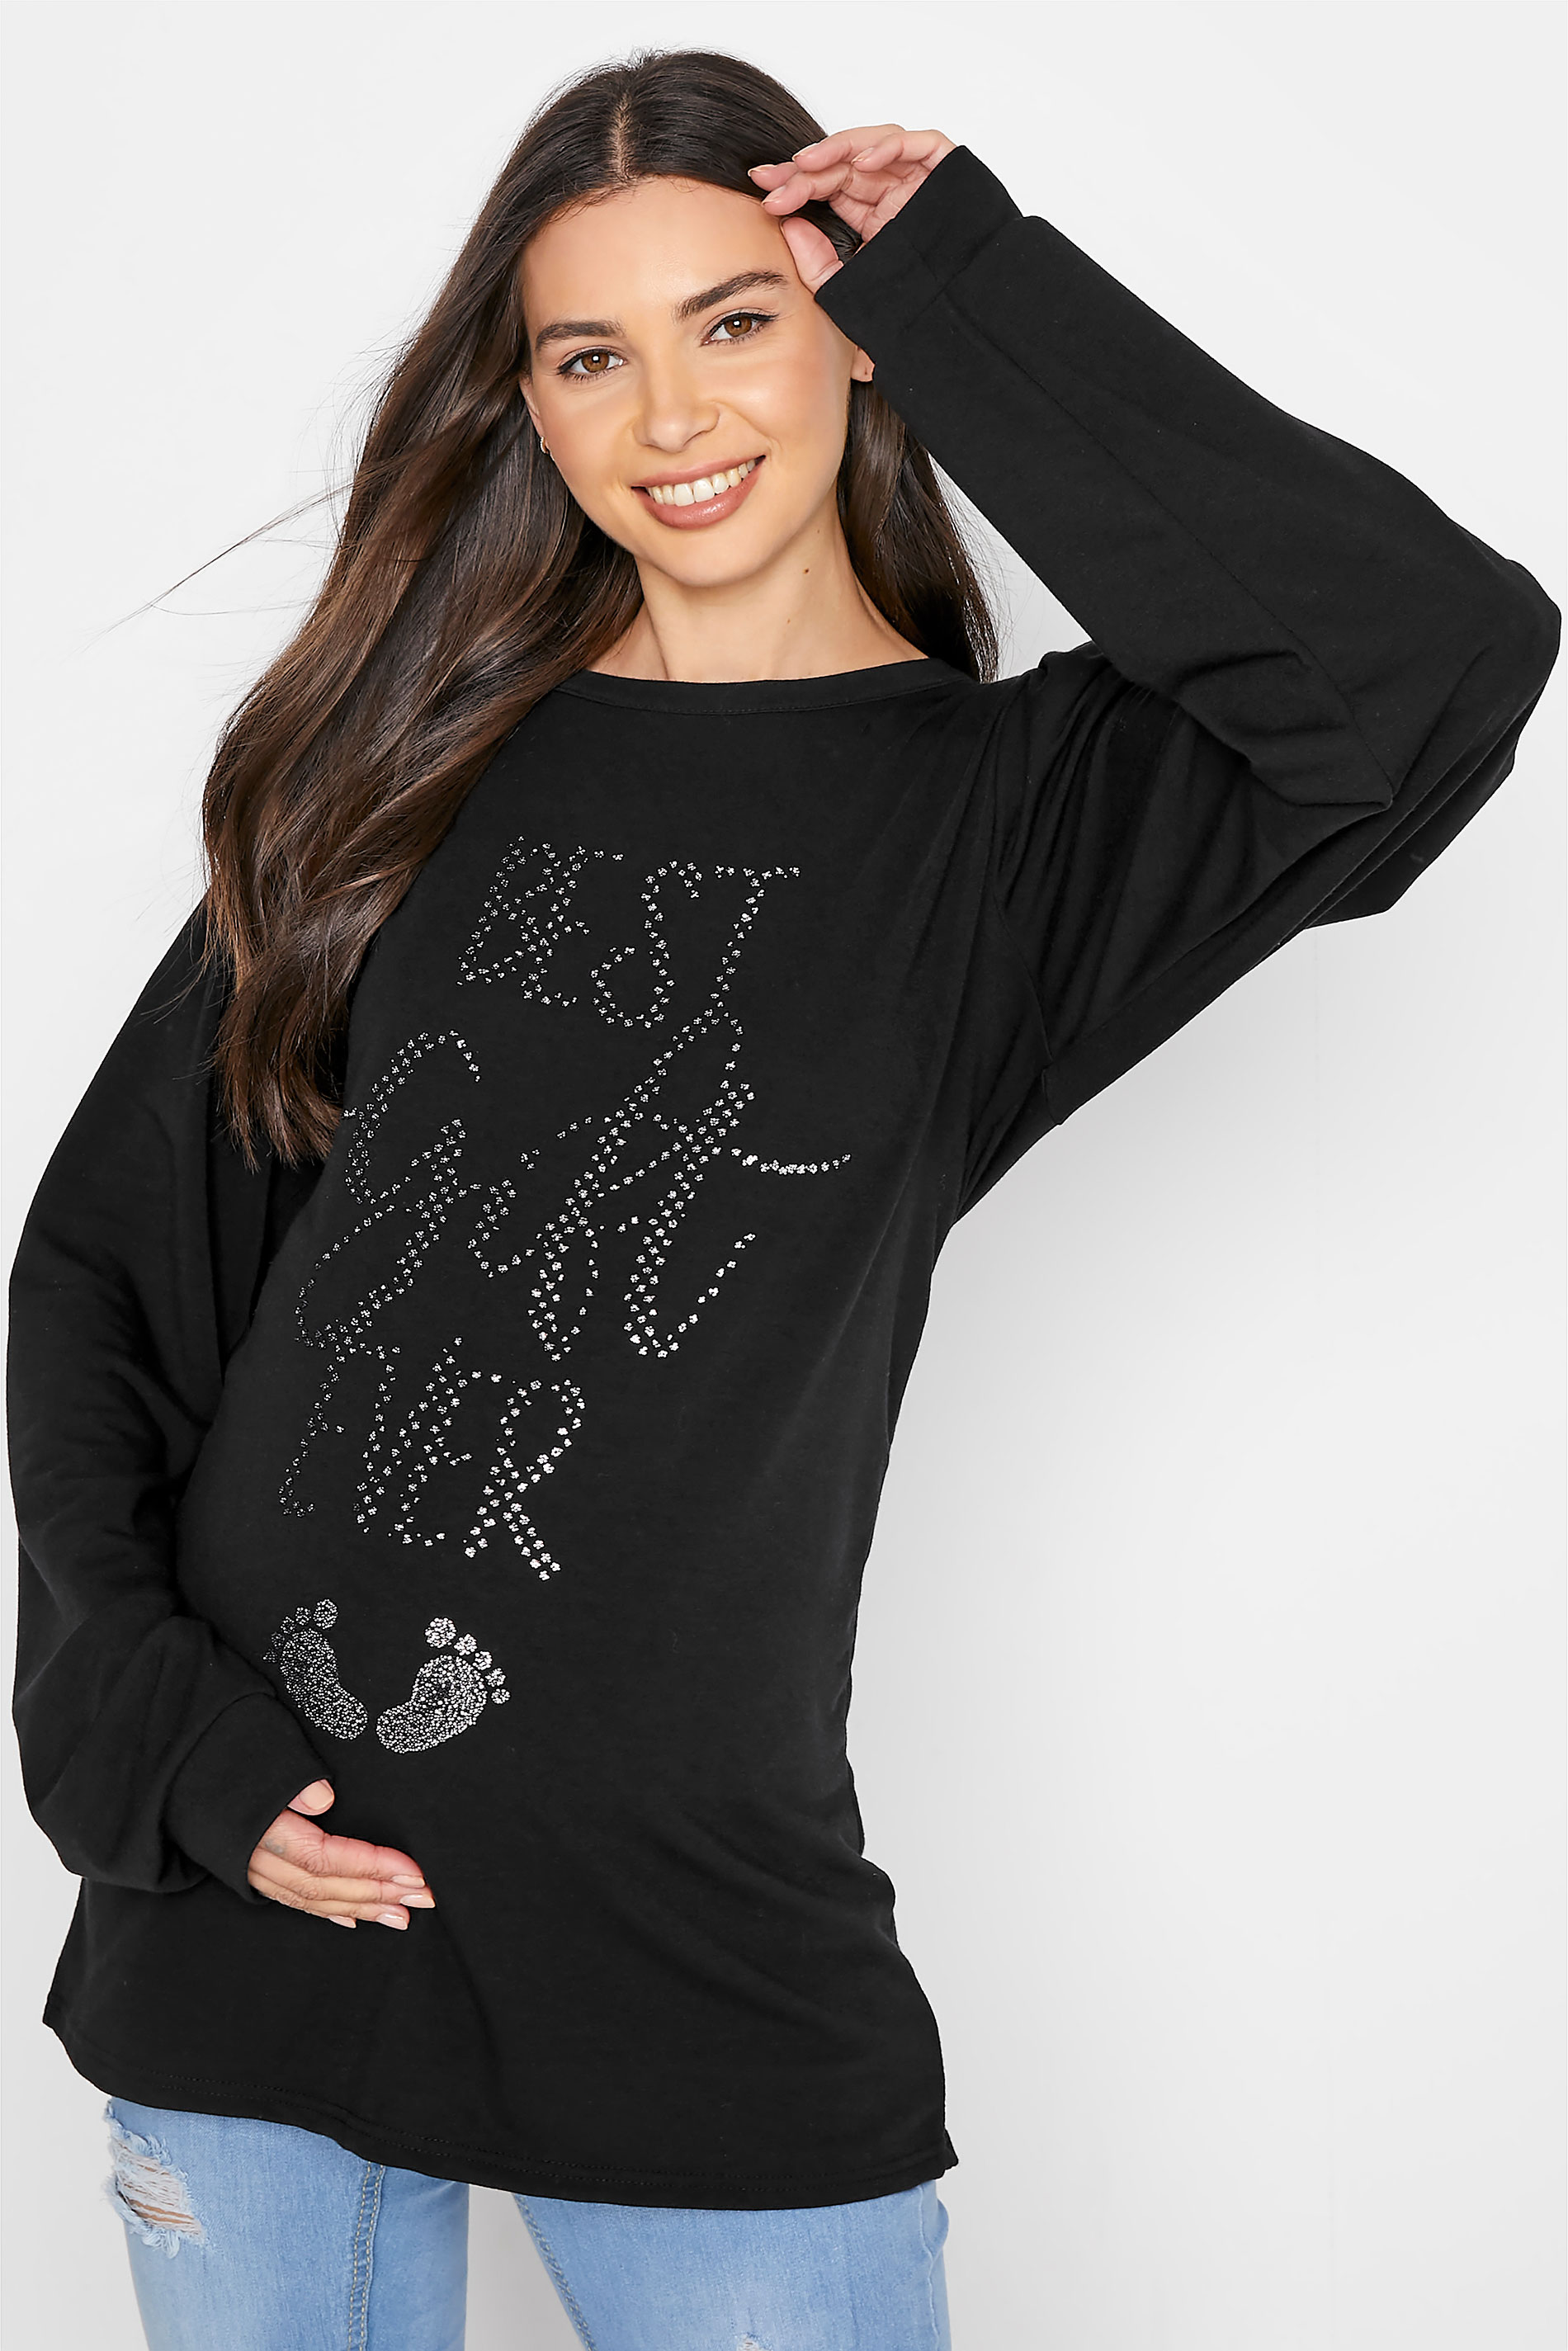 LTS Maternity Black 'Best Gift Ever' Embellished Slogan Christmas Top_A.jpg